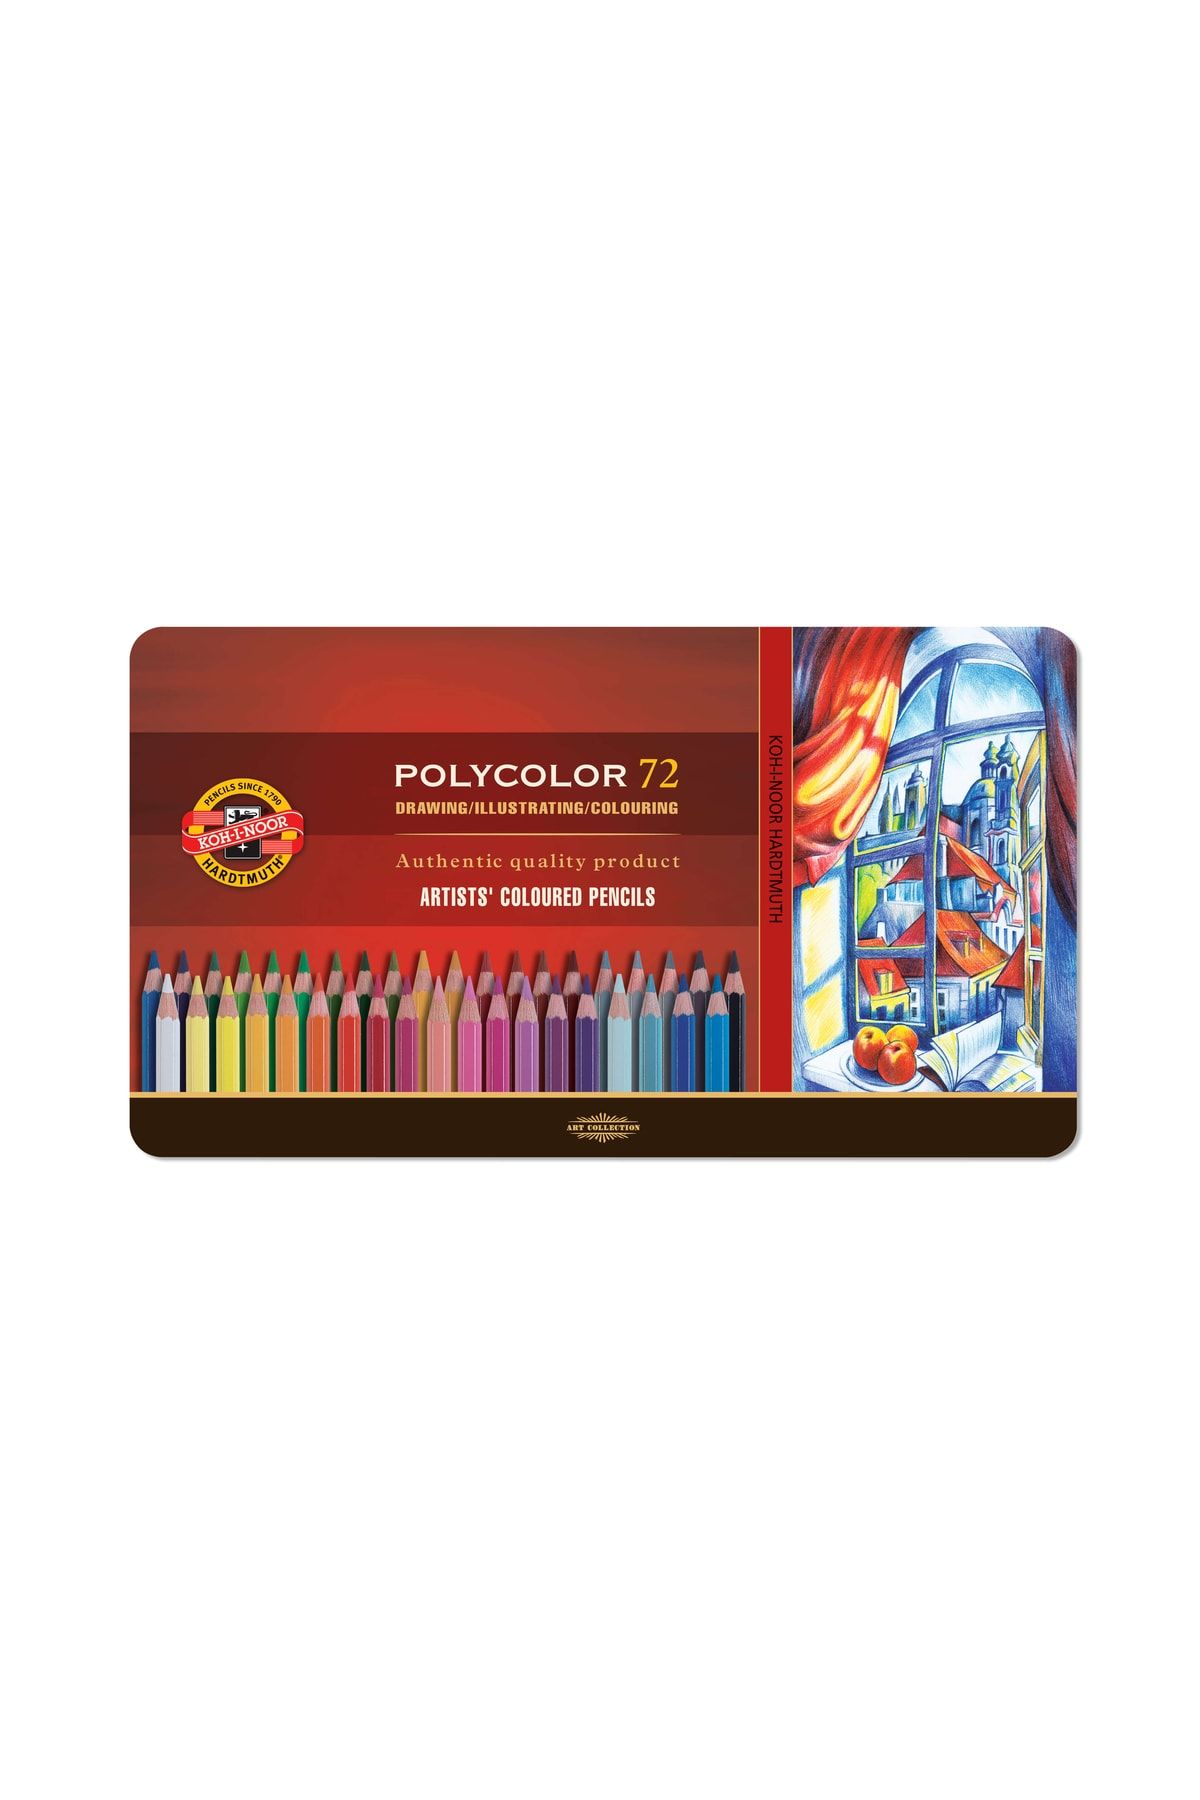 Kohinoor Polycolor Sanatsal Kuru Boya Kalemi 72 Renk Of Artist´s Coloured Pencils 3827 72